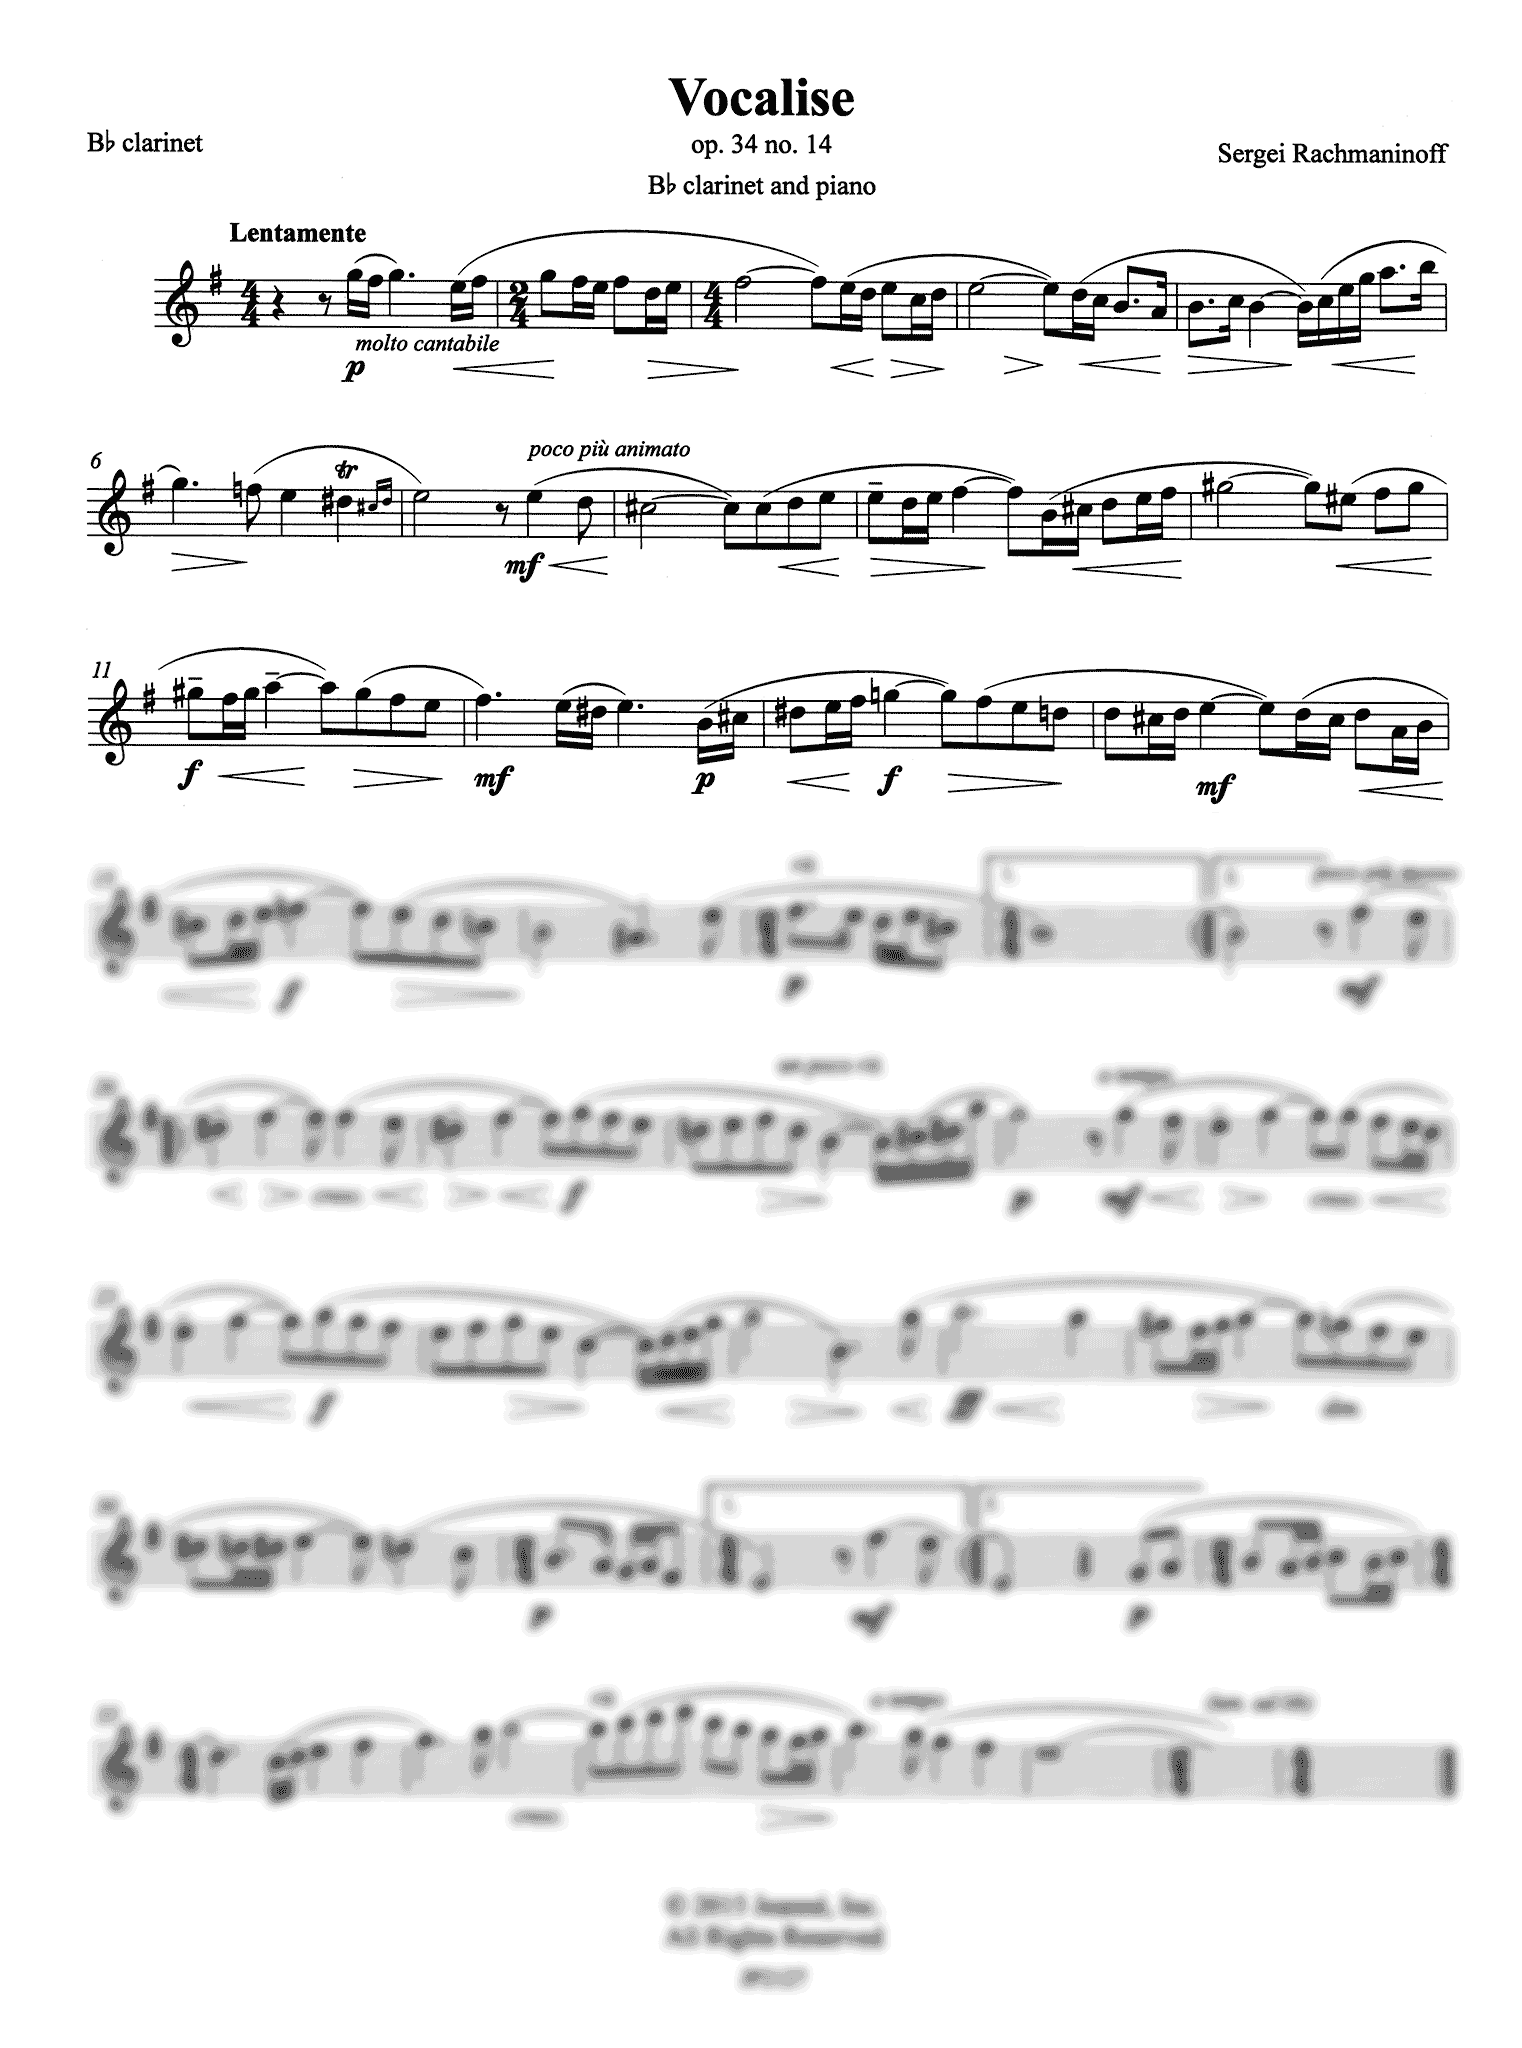 Rachmaninoff Vocalise Op. 34 No. 14 B-flat Clarinet part